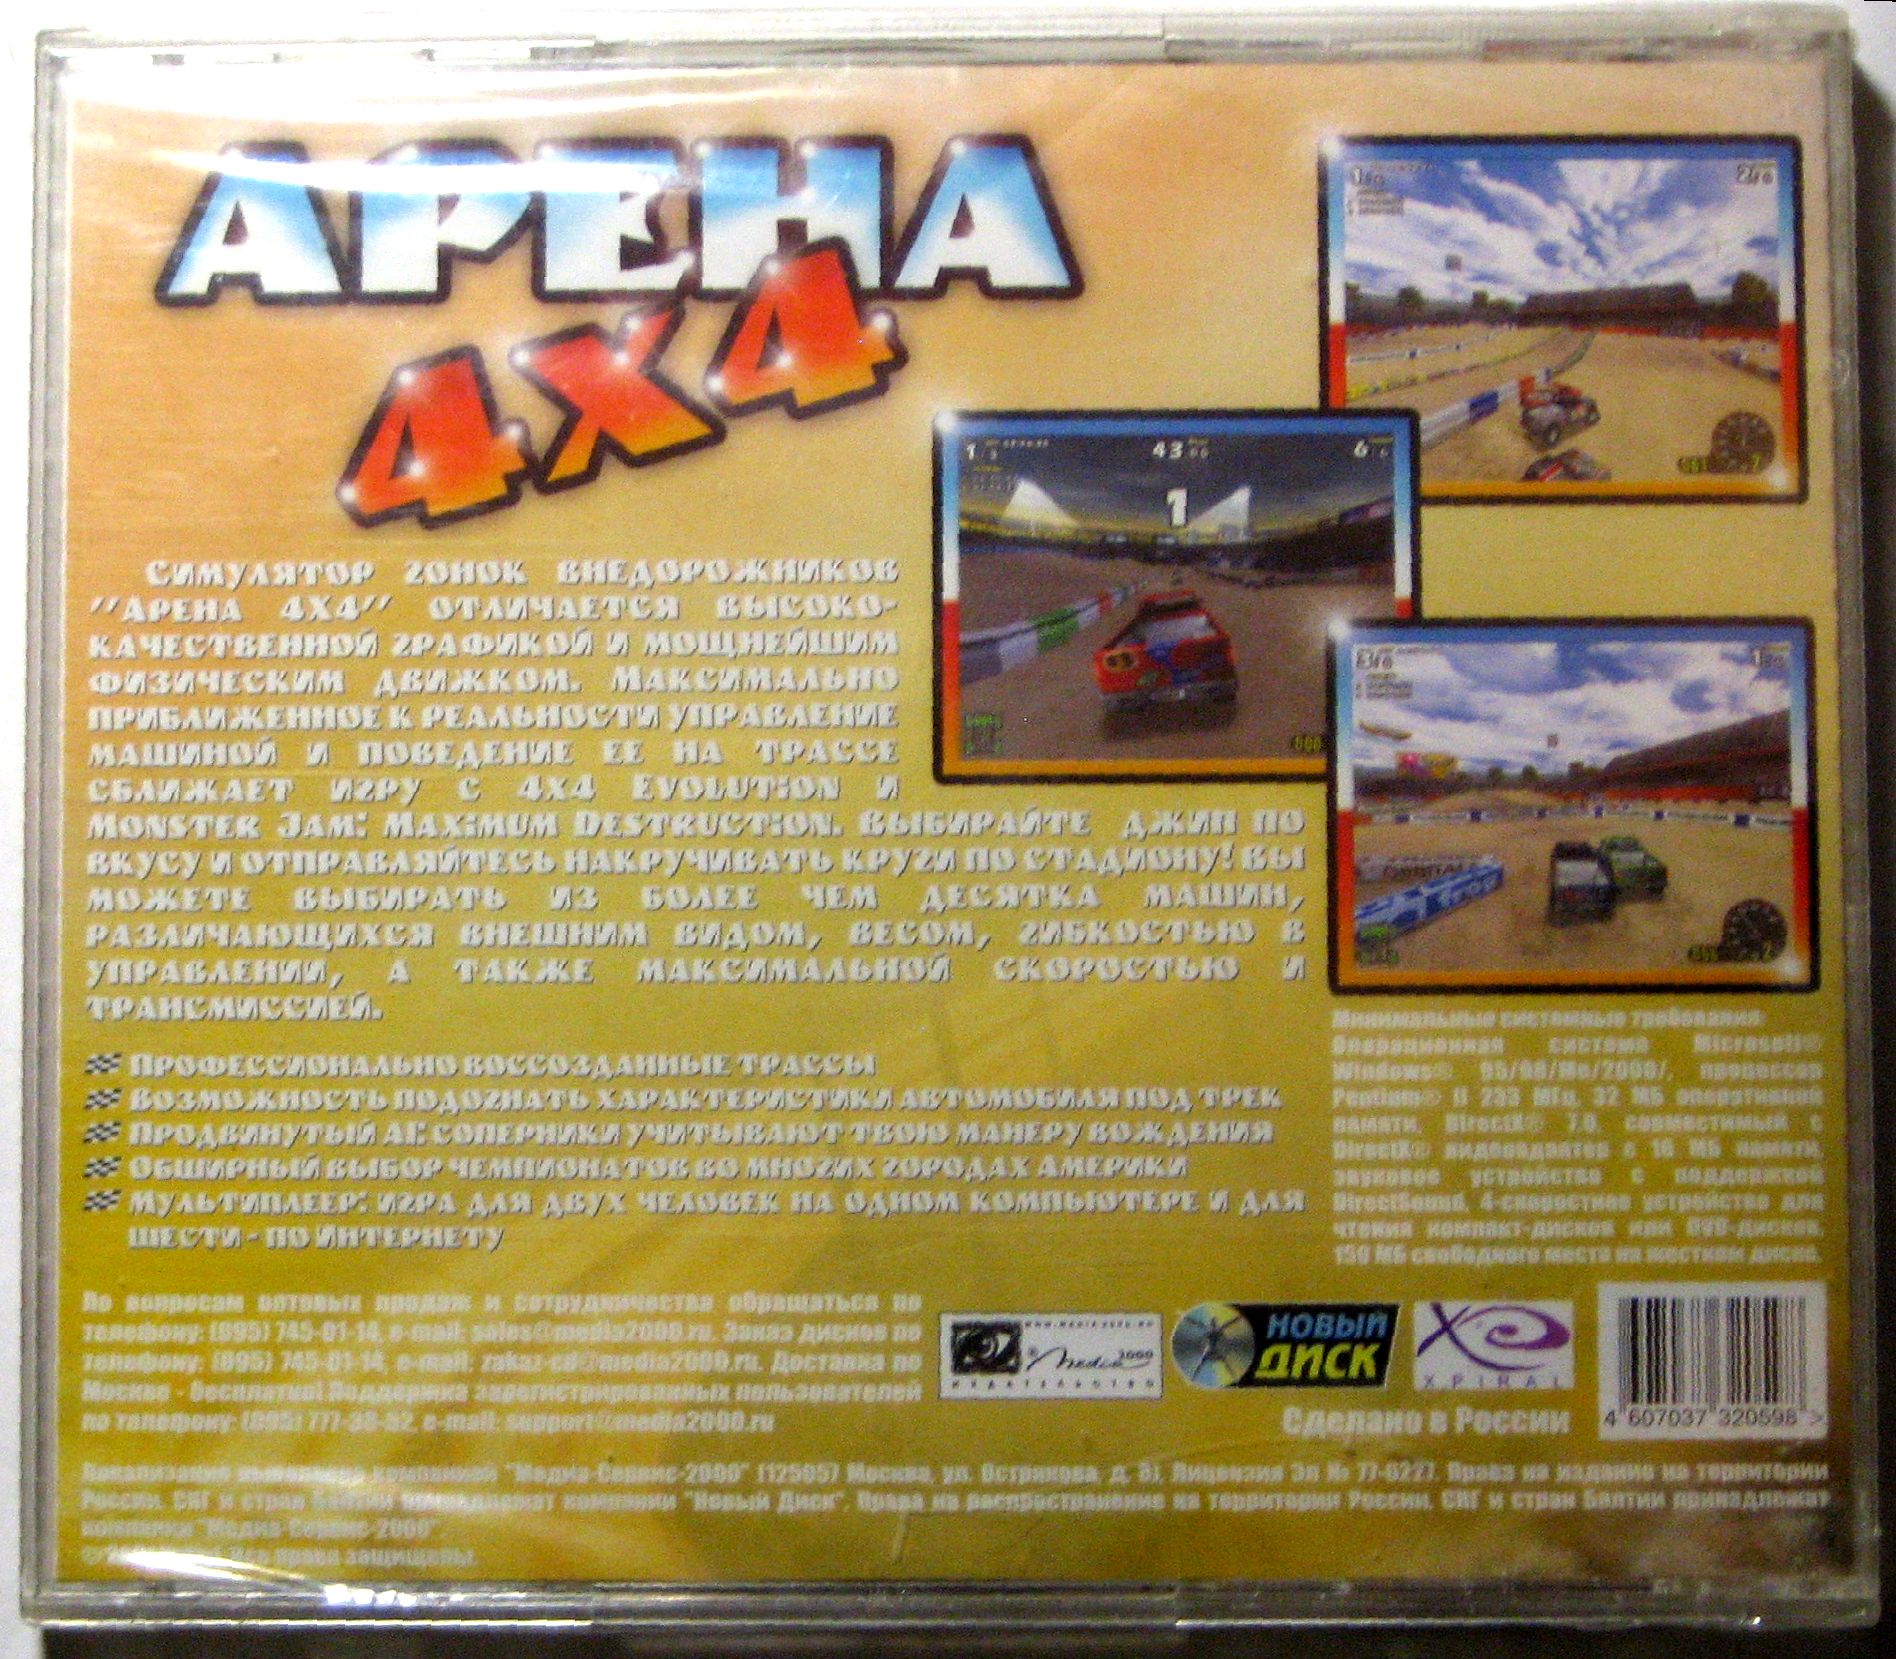 apk_info.ru_image_disk_arena4x4_2.jpg